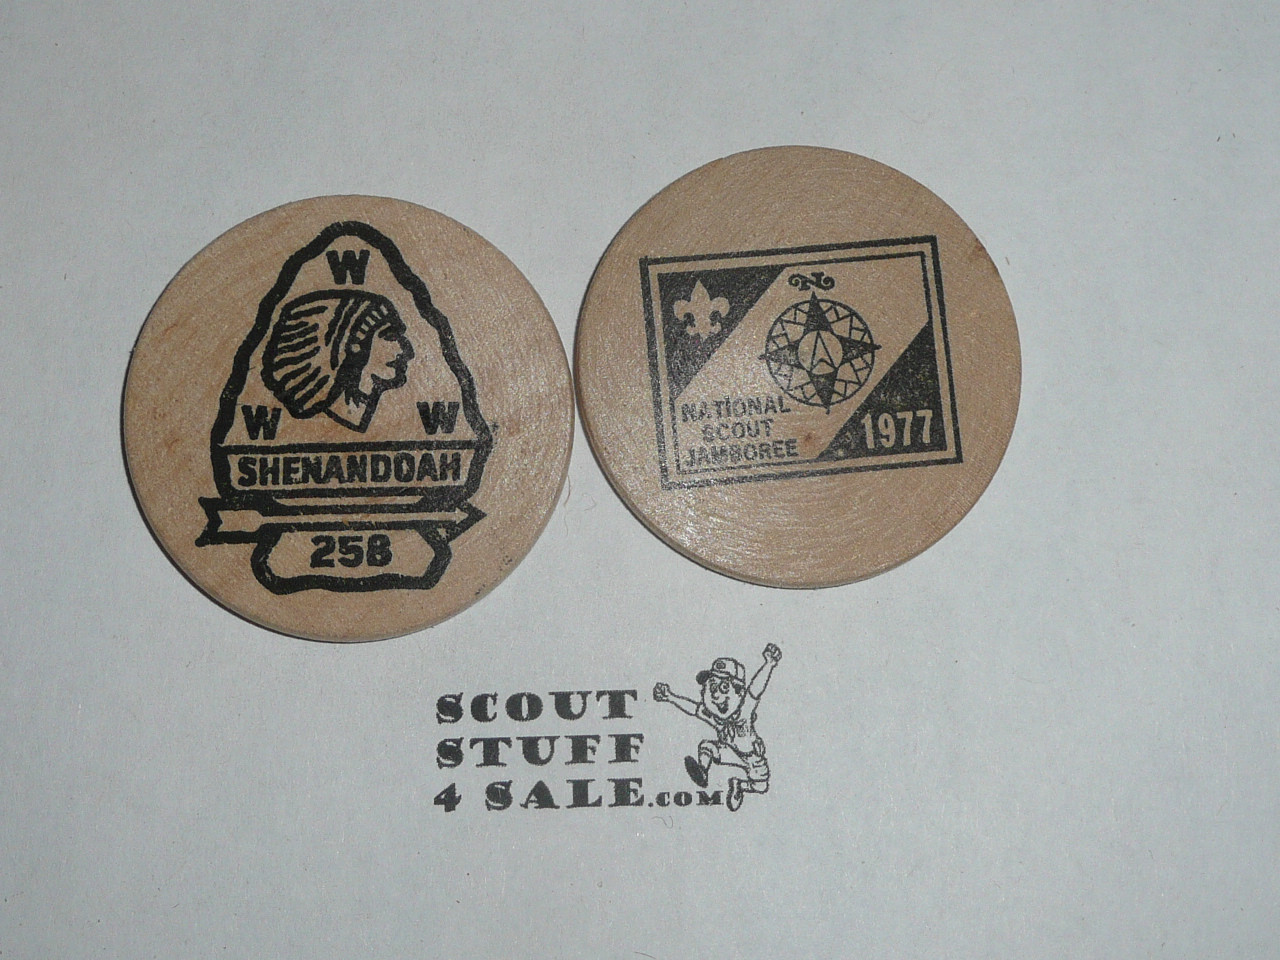 1977 National Jamboree Shenandoah Order of the Arrow Lodge #258, Boy Scout Wooden Nickel